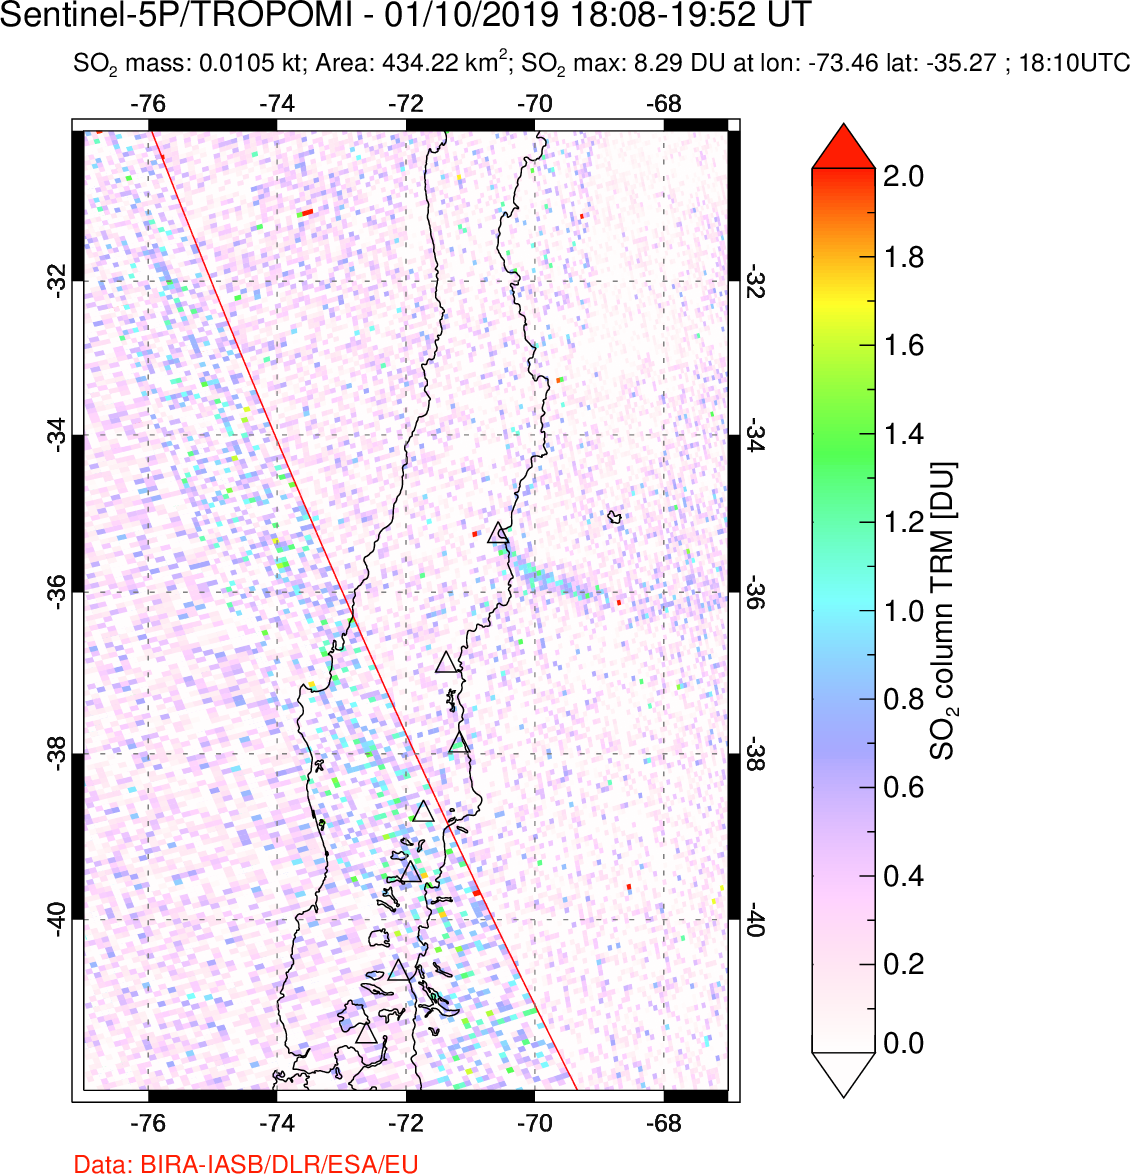 A sulfur dioxide image over Central Chile on Jan 10, 2019.